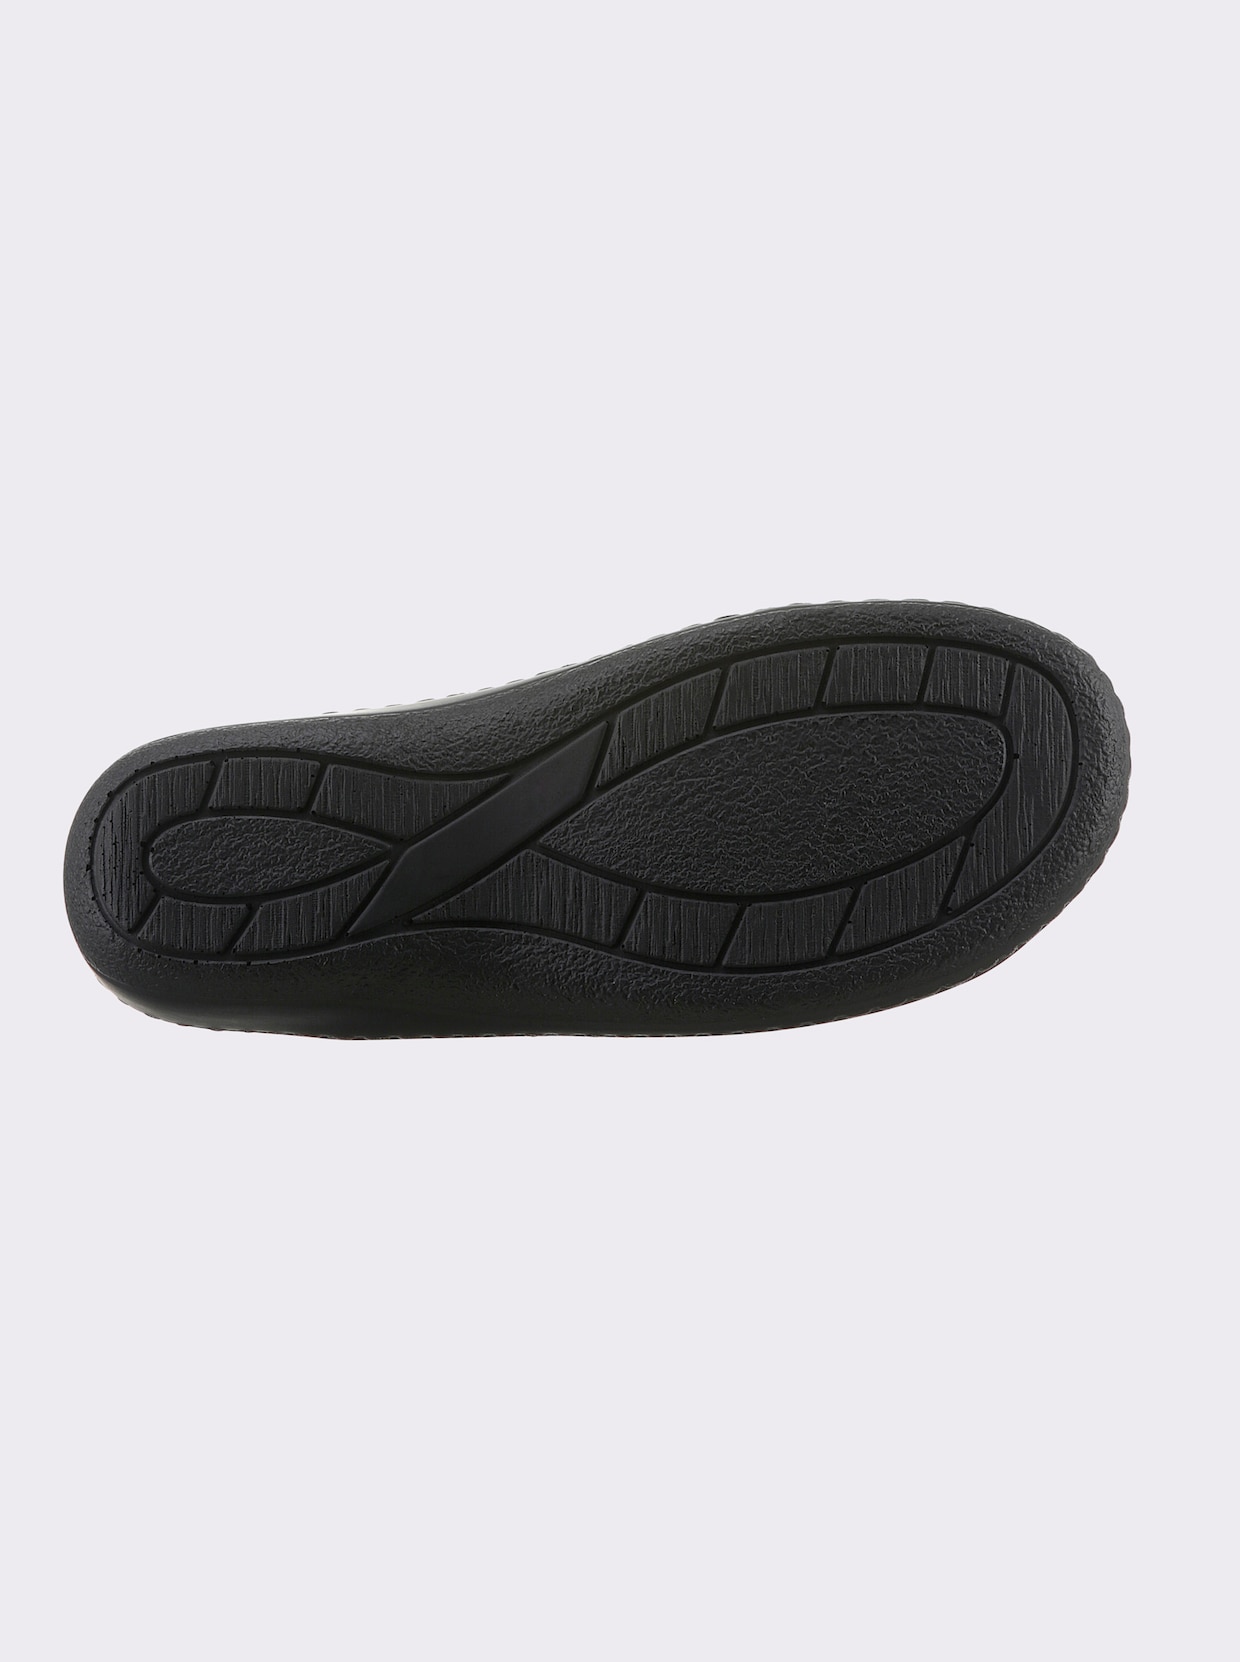 Belvida slippers - zwart/bordeaux